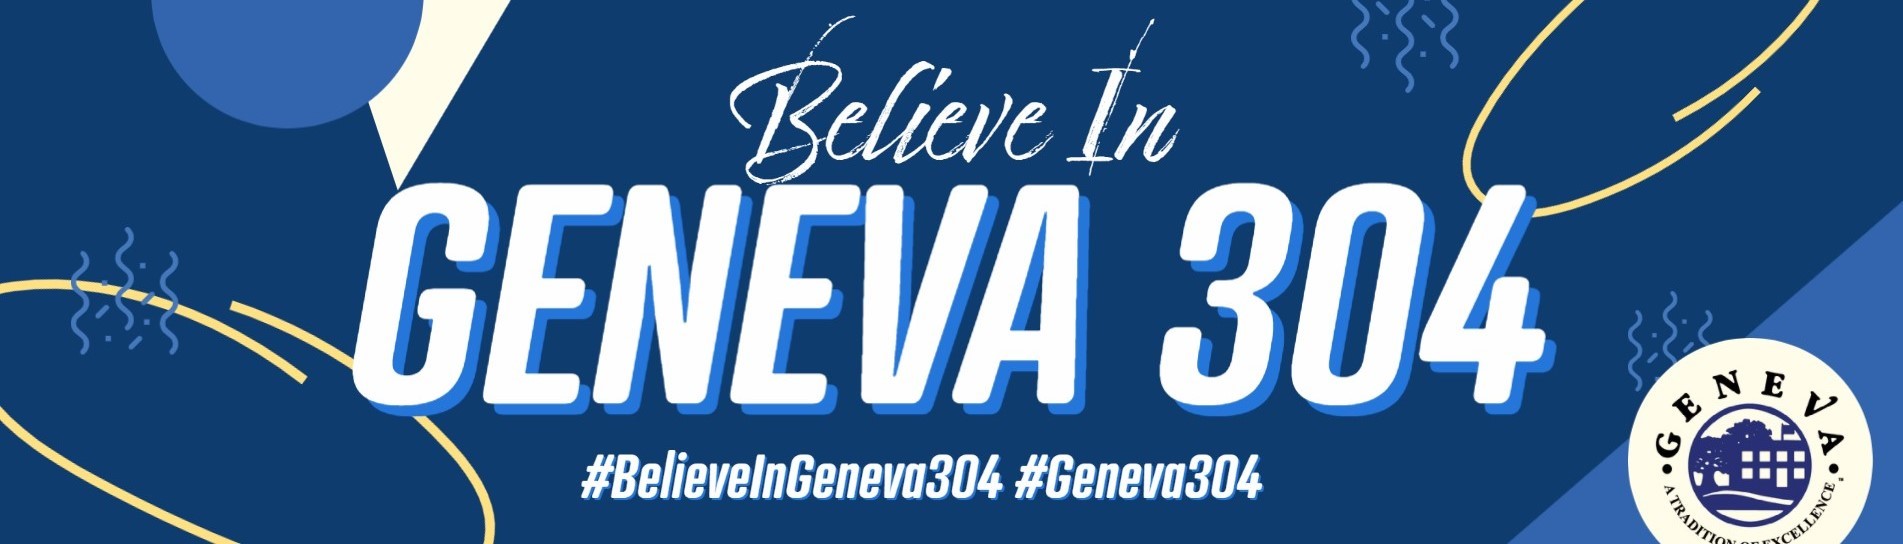 Believe in Geneva304